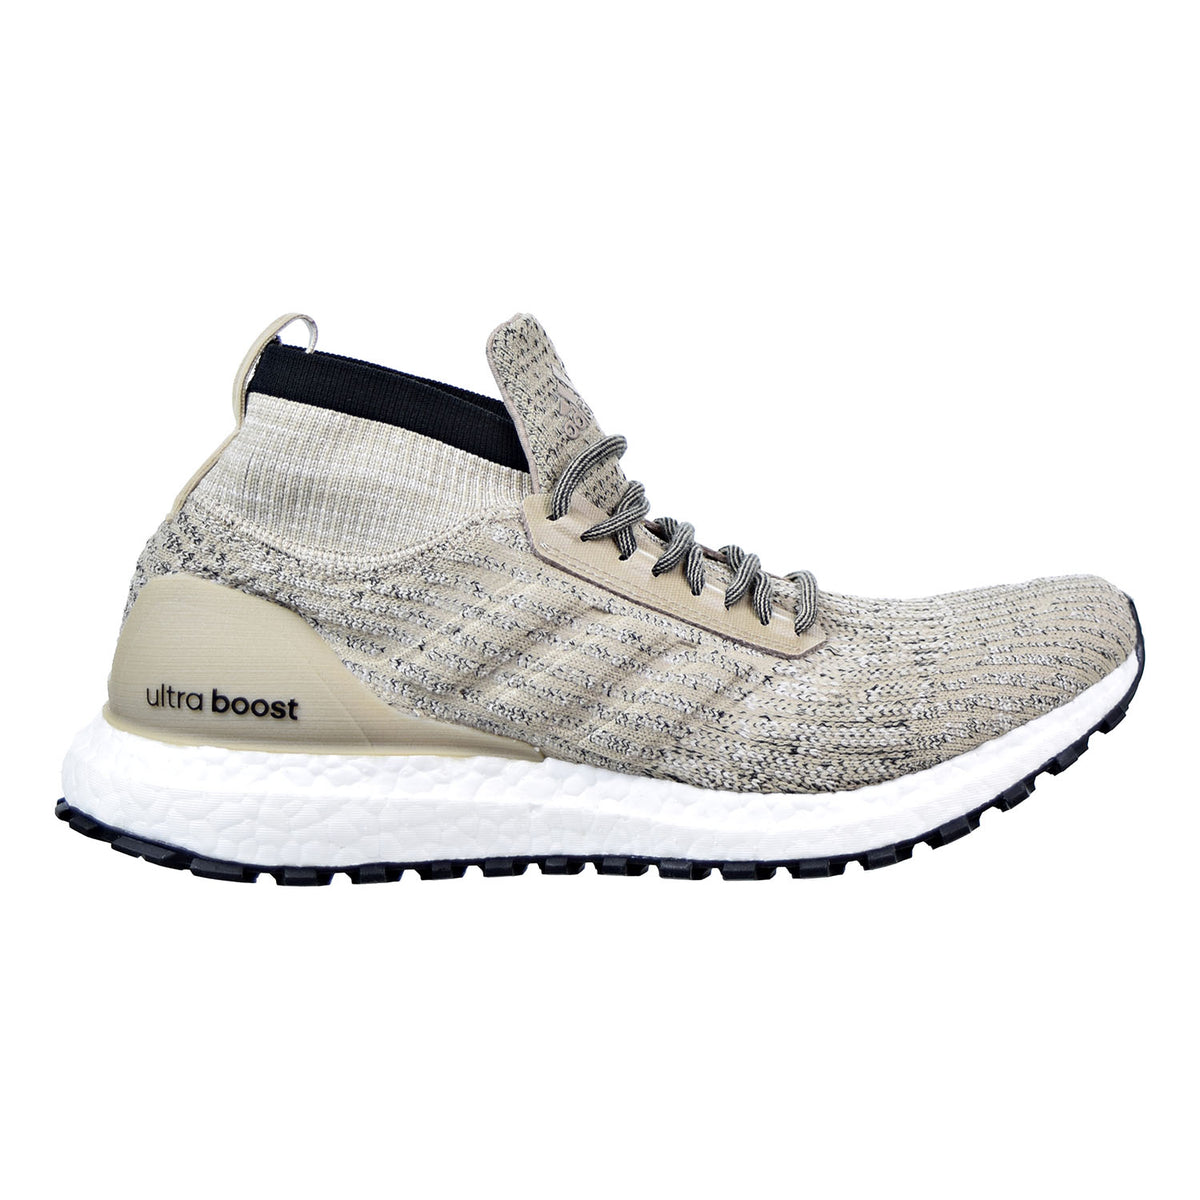 Adidas Boost All Terrain LTD Men's Shoes Grey/White